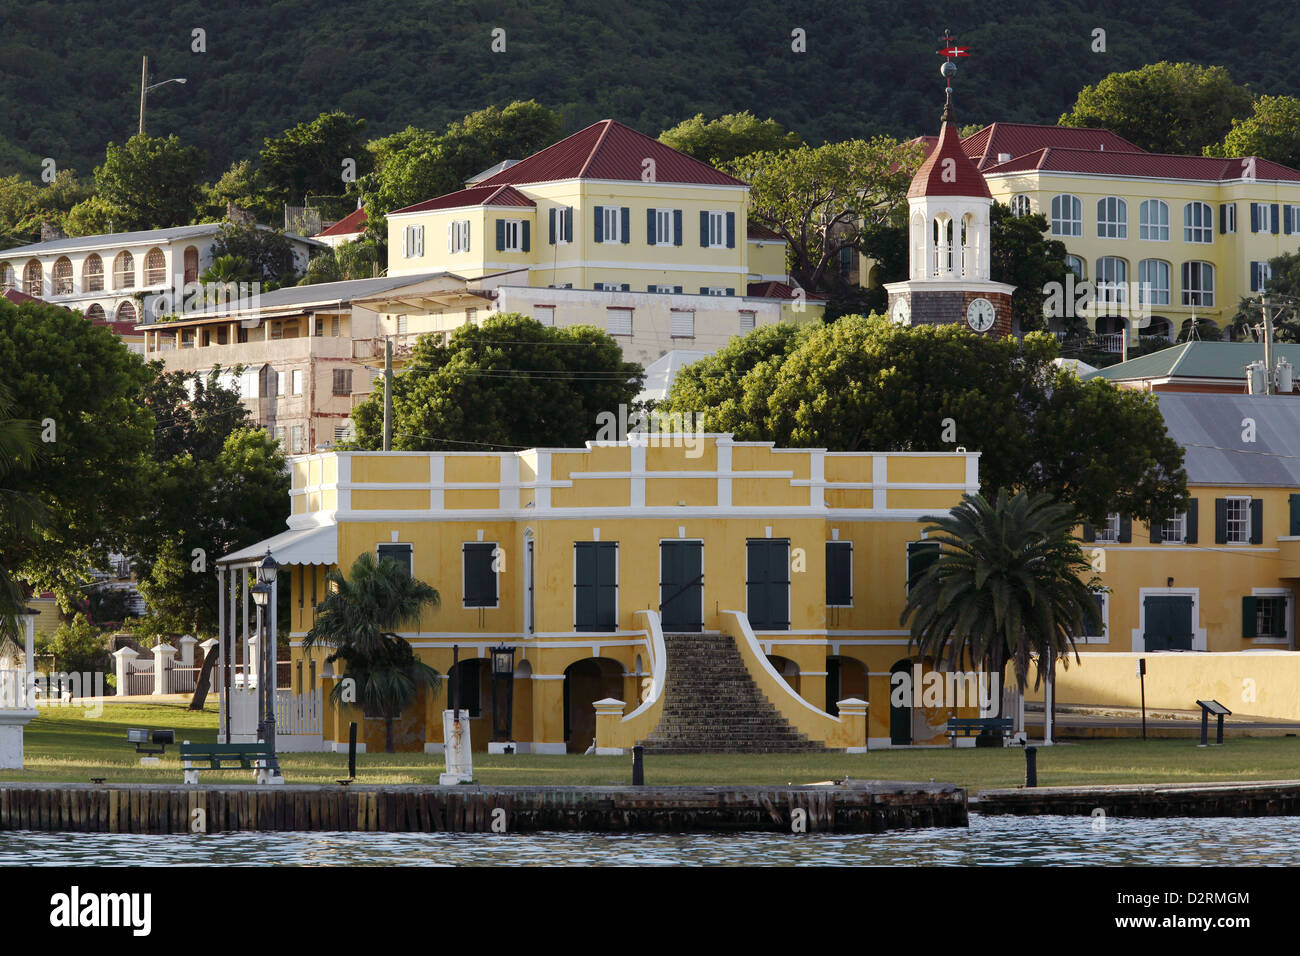 Alte dänische Zollhaus, Christiansted, St. Croix, U.S. Virgin Islands, Karibik Stockfoto